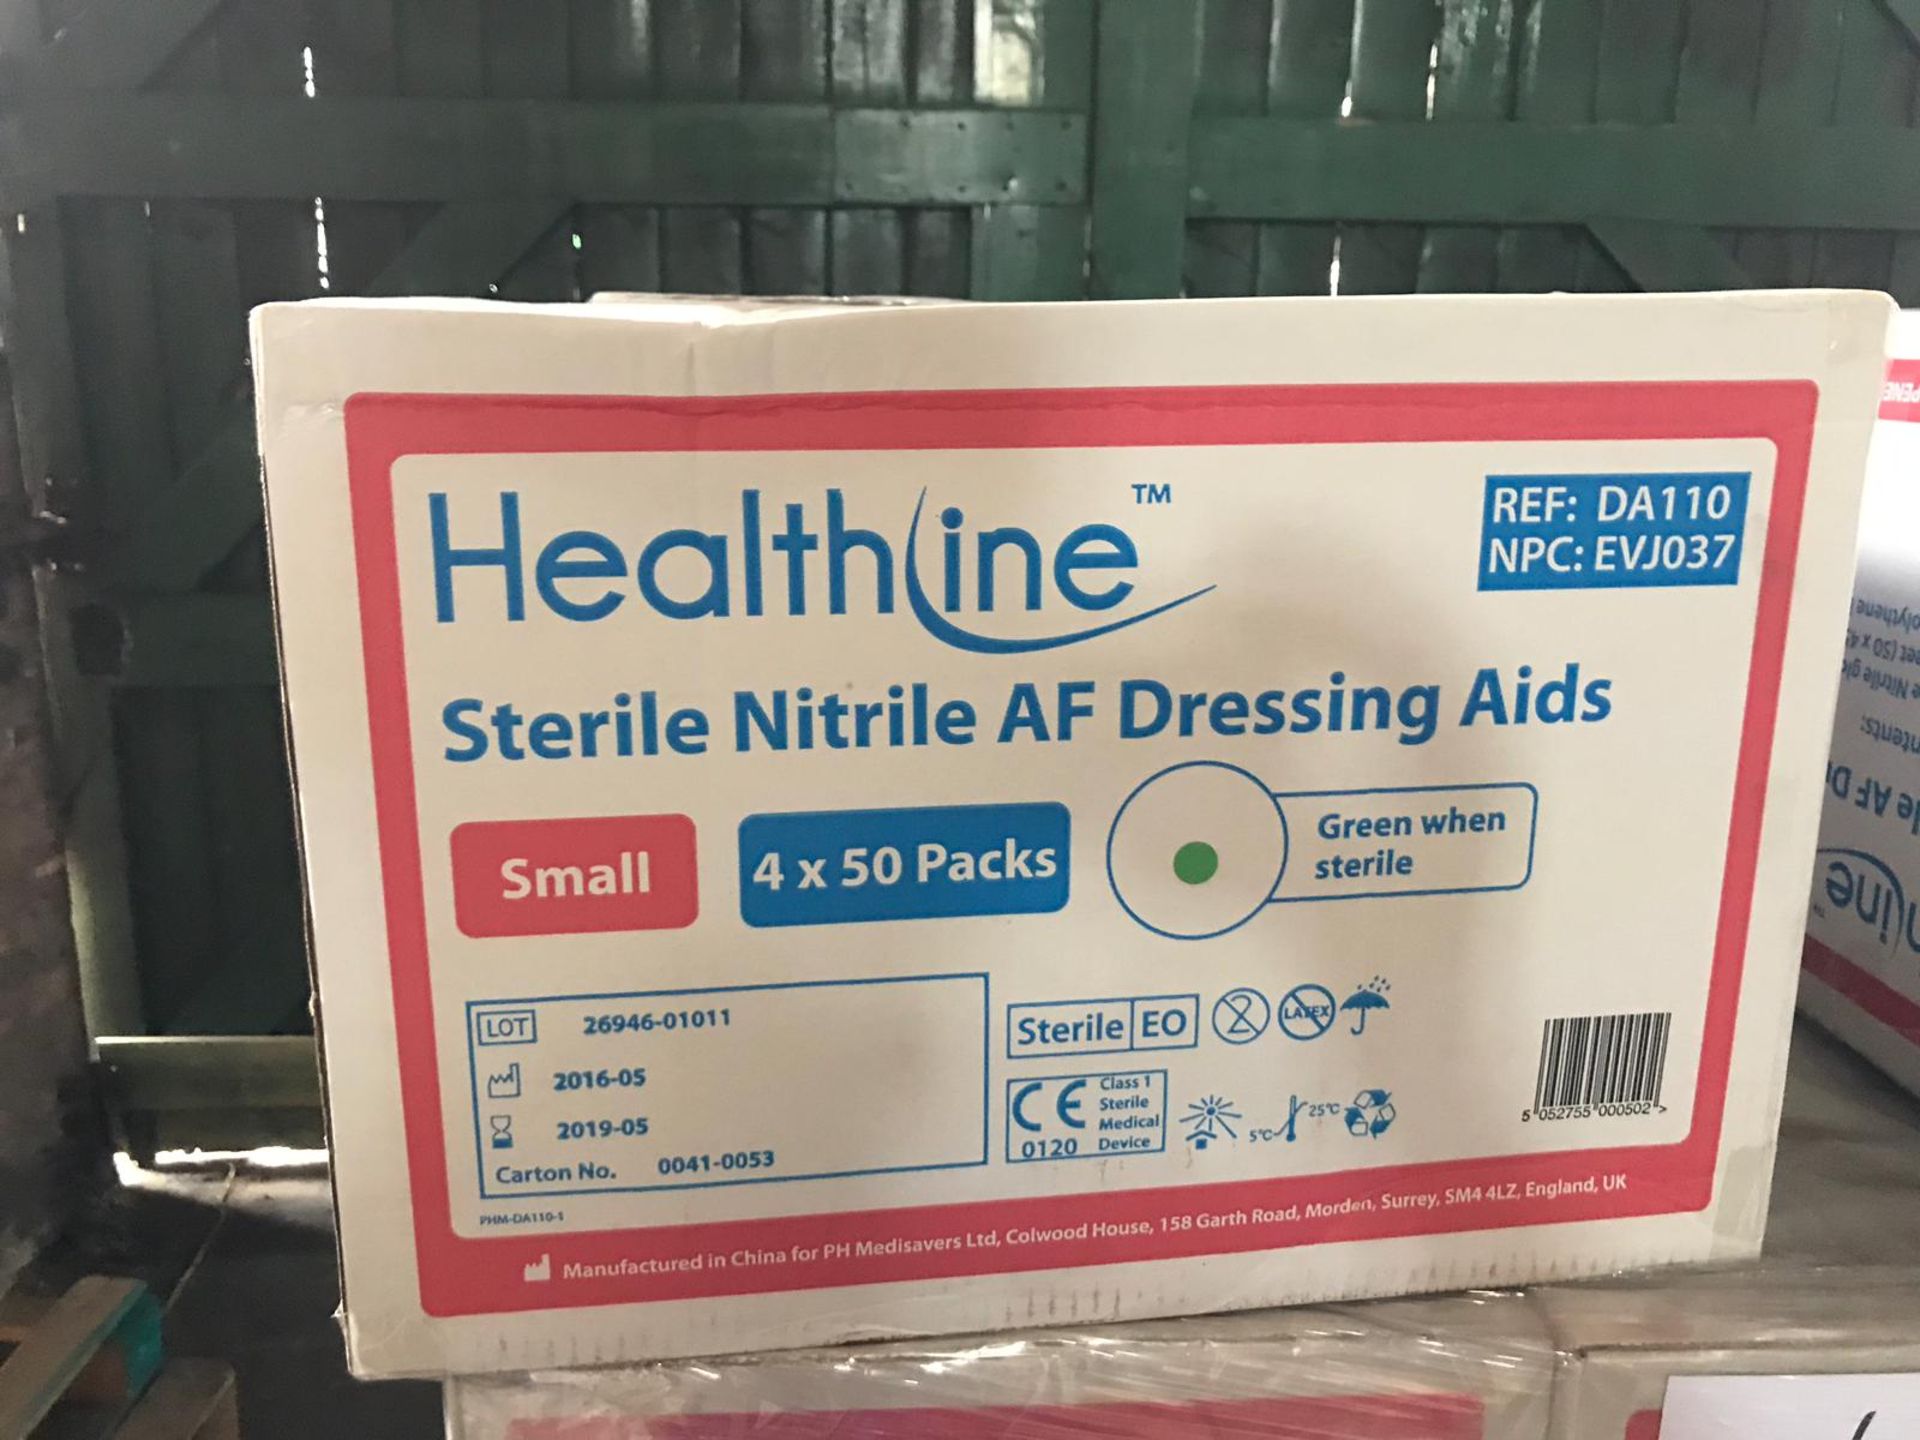 STERILE NITRILE AF DRESSING AIDS SMALL 40 CASES ON PALLET - Image 2 of 2